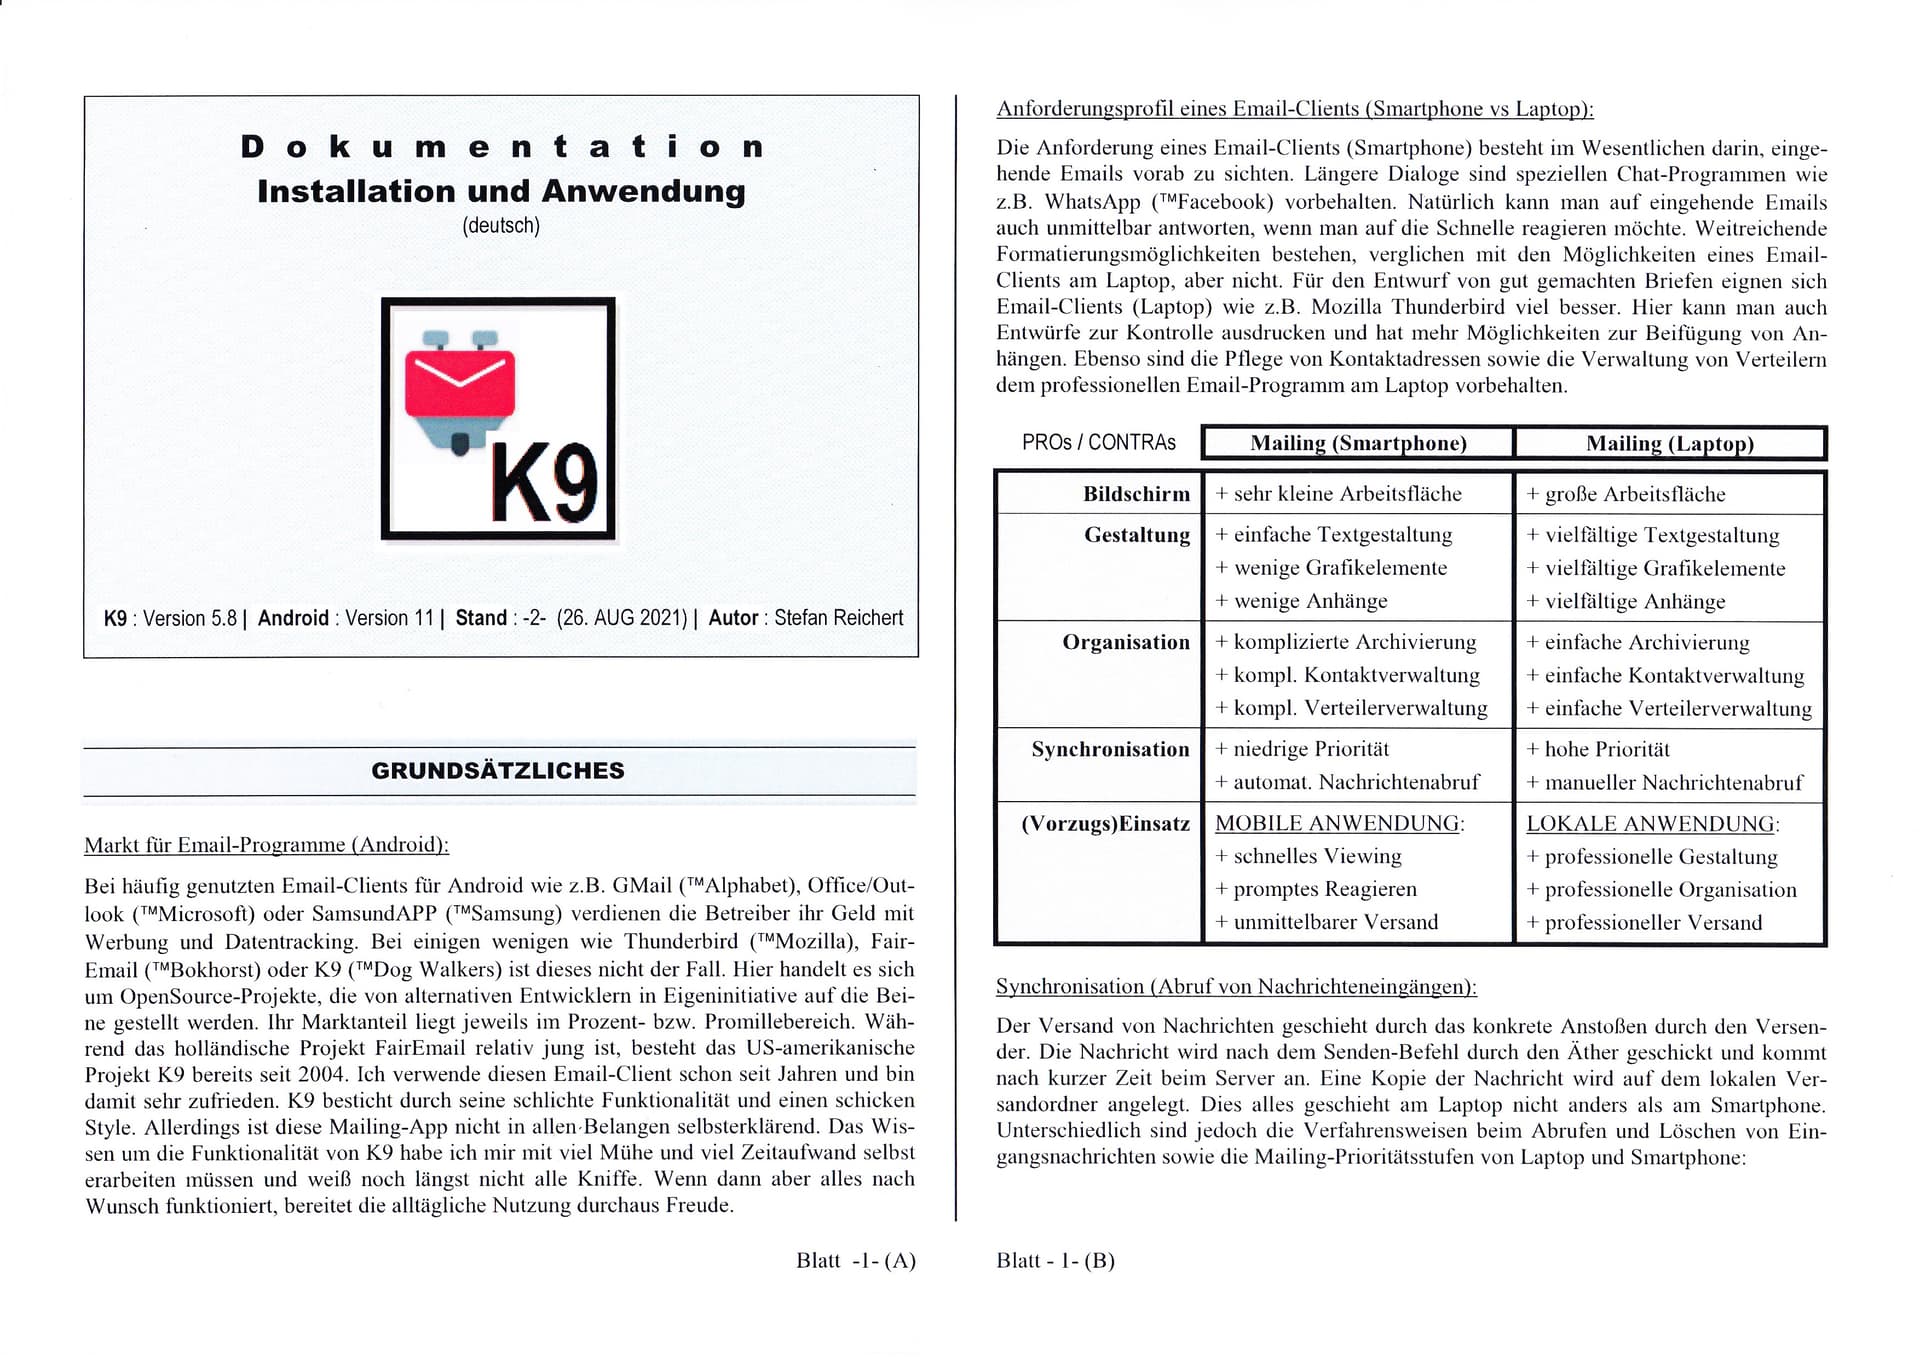 K9 documentation (German), page -1-